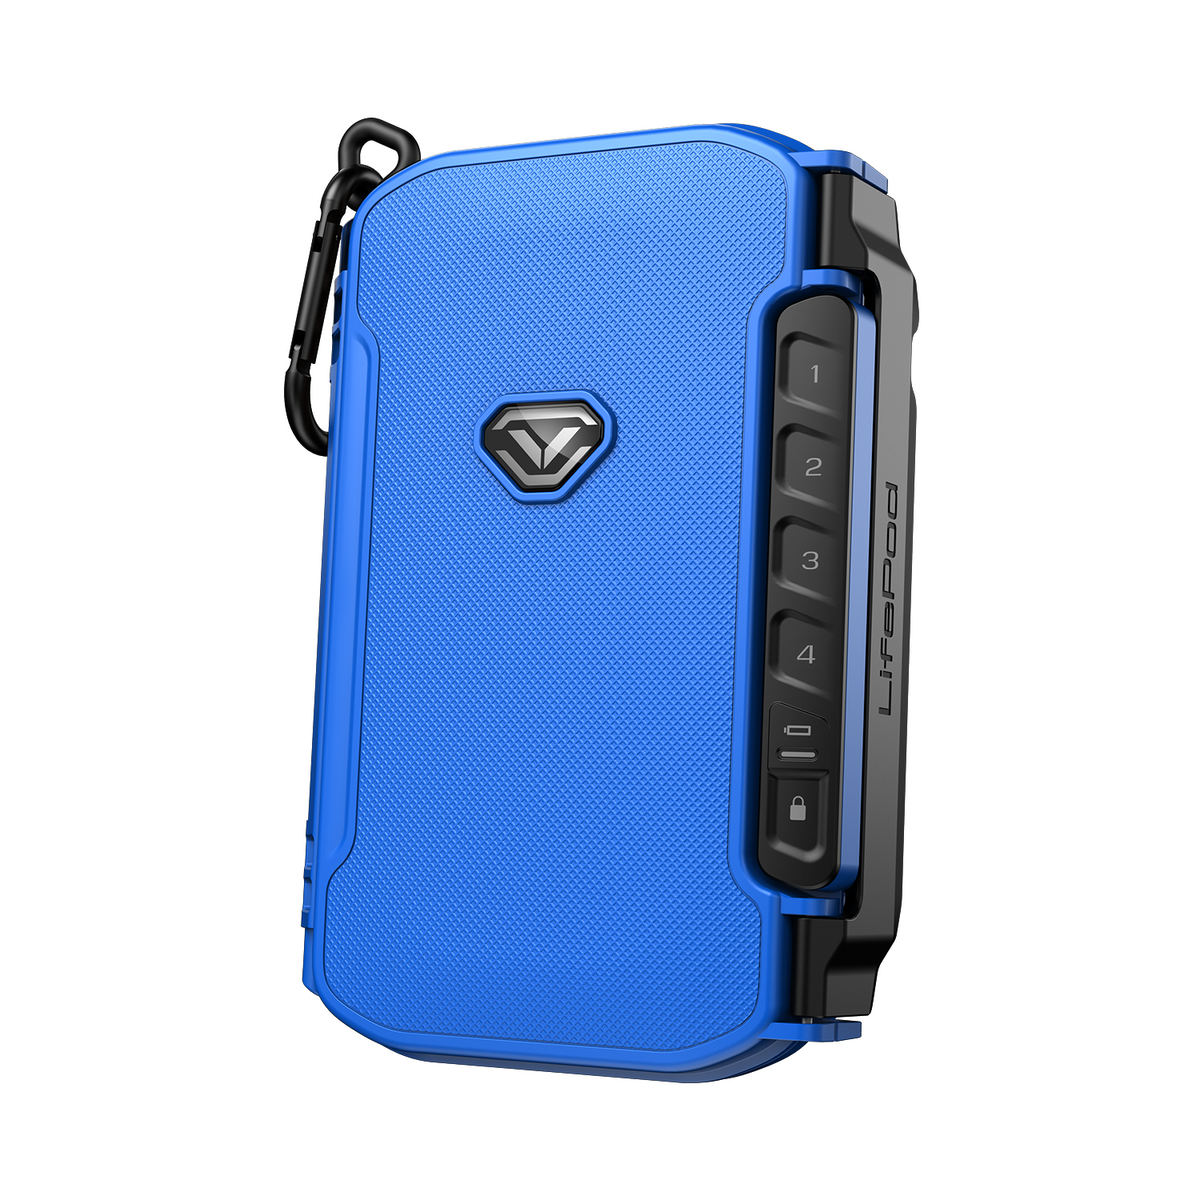 Vaultek - LifePod X Mini Weatherproof Lockbox